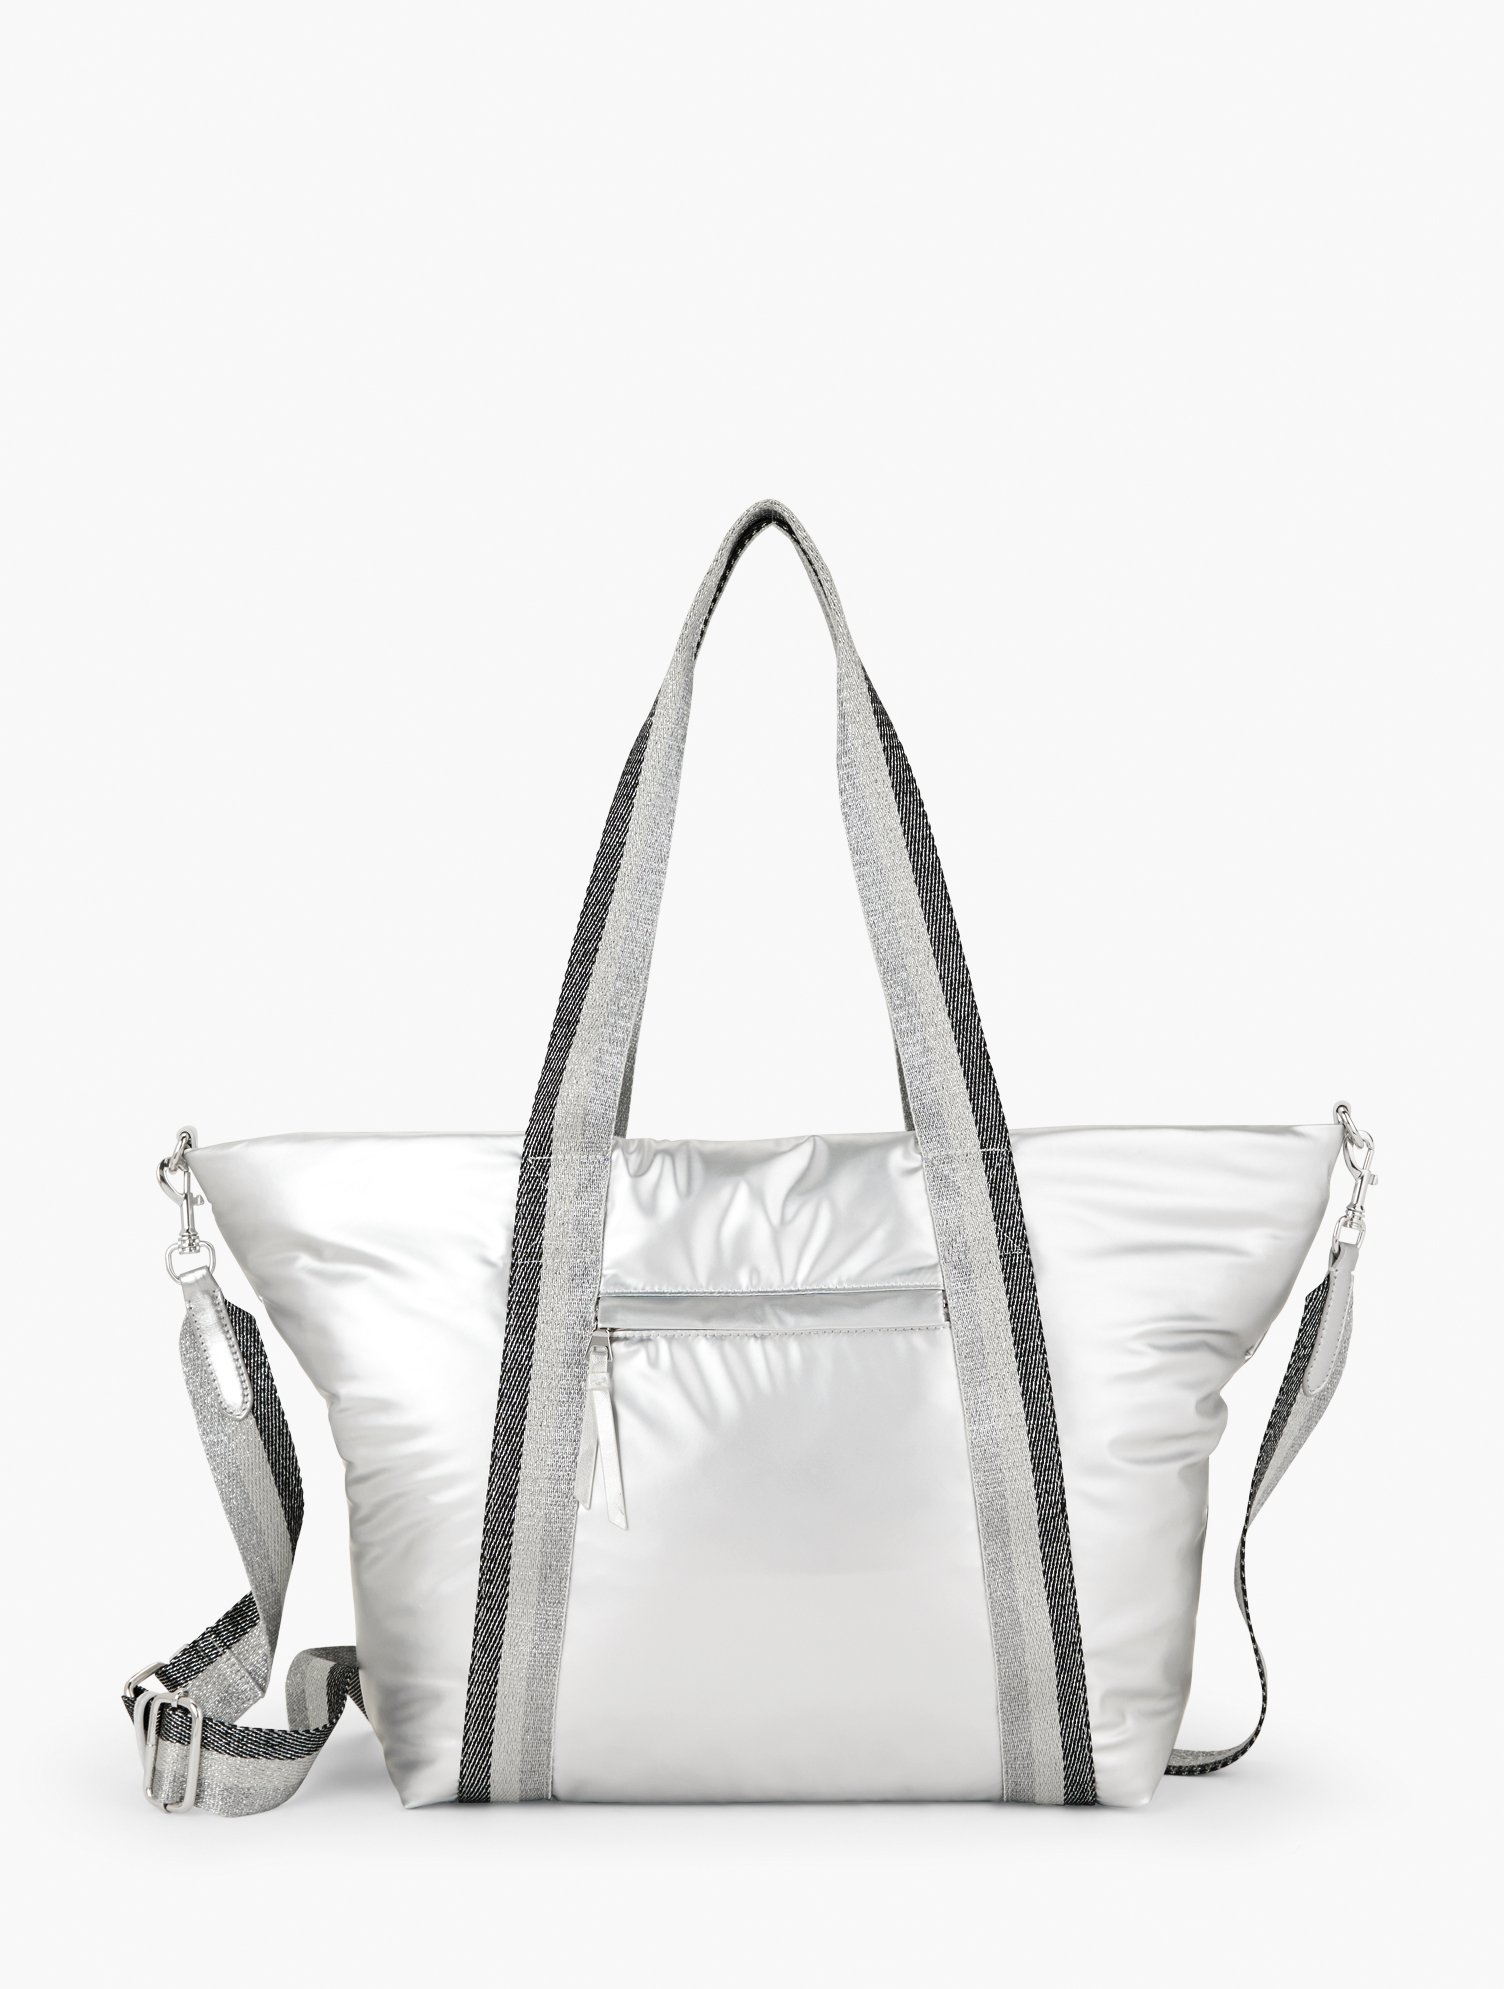 Think Royln Shoulder bags for Women, Online Sale up to 40% off